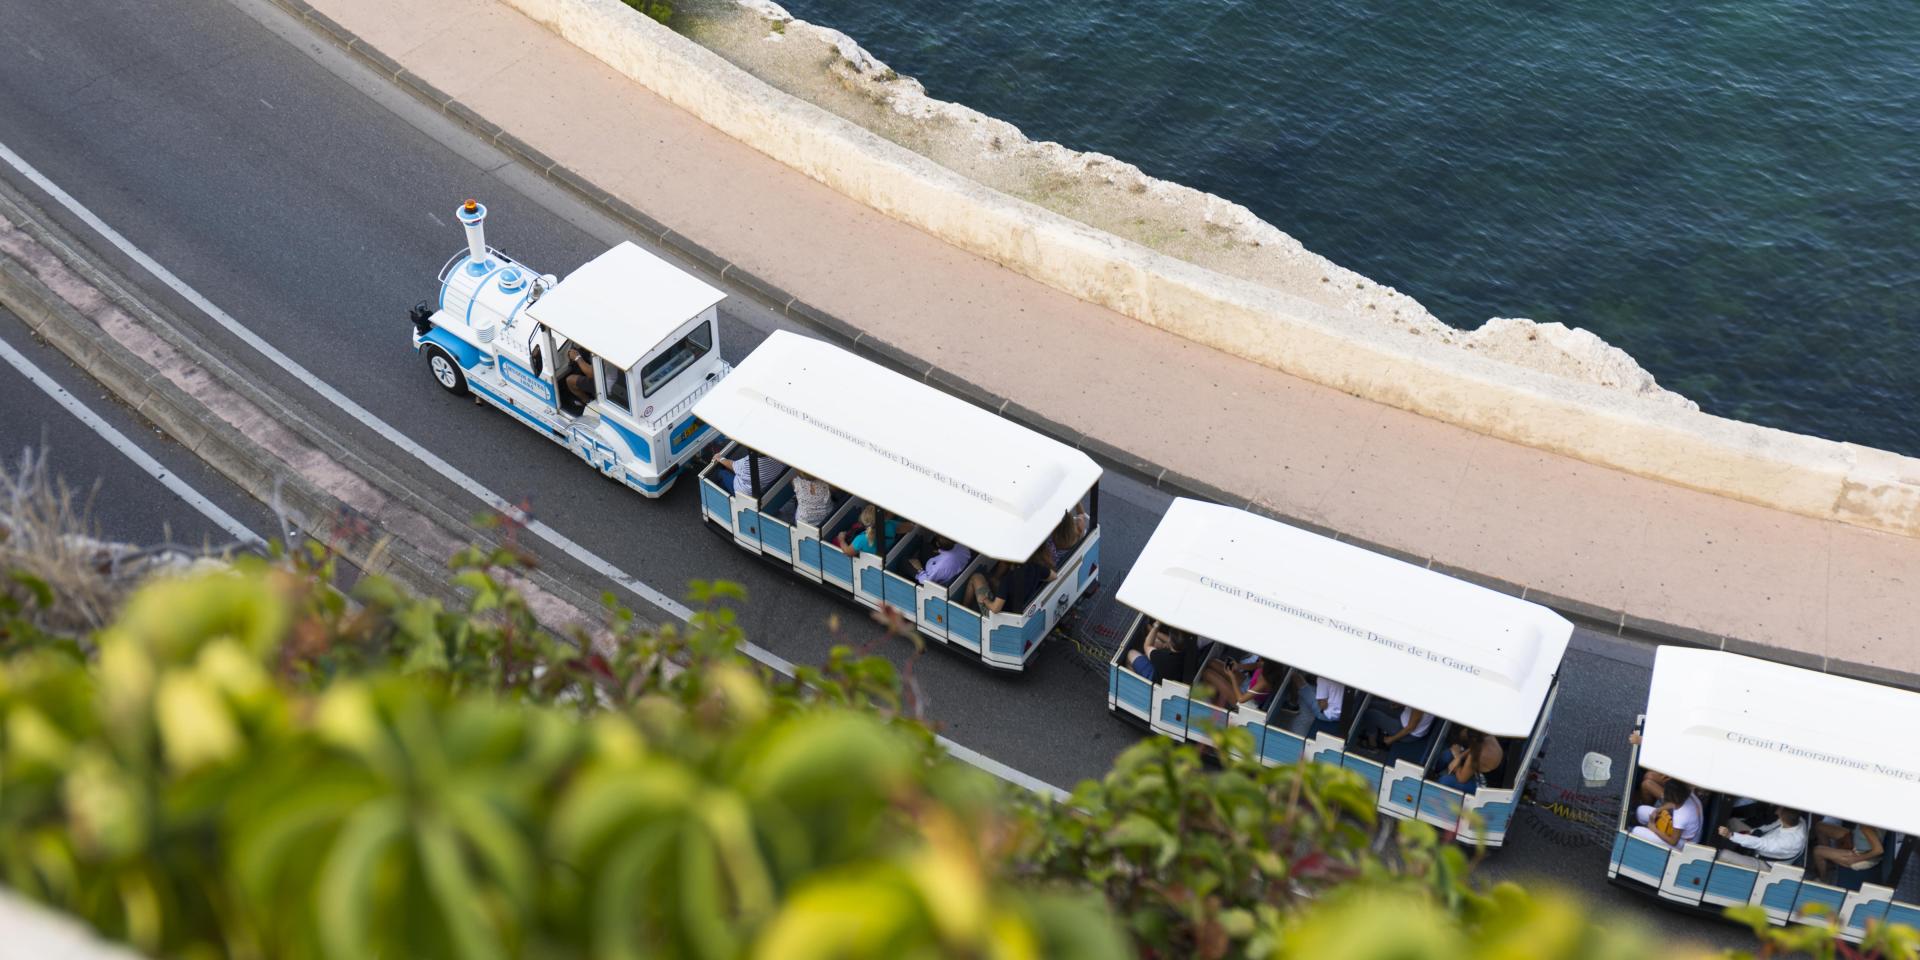 Tourist train and Hop-on Hop-off bus Marseille